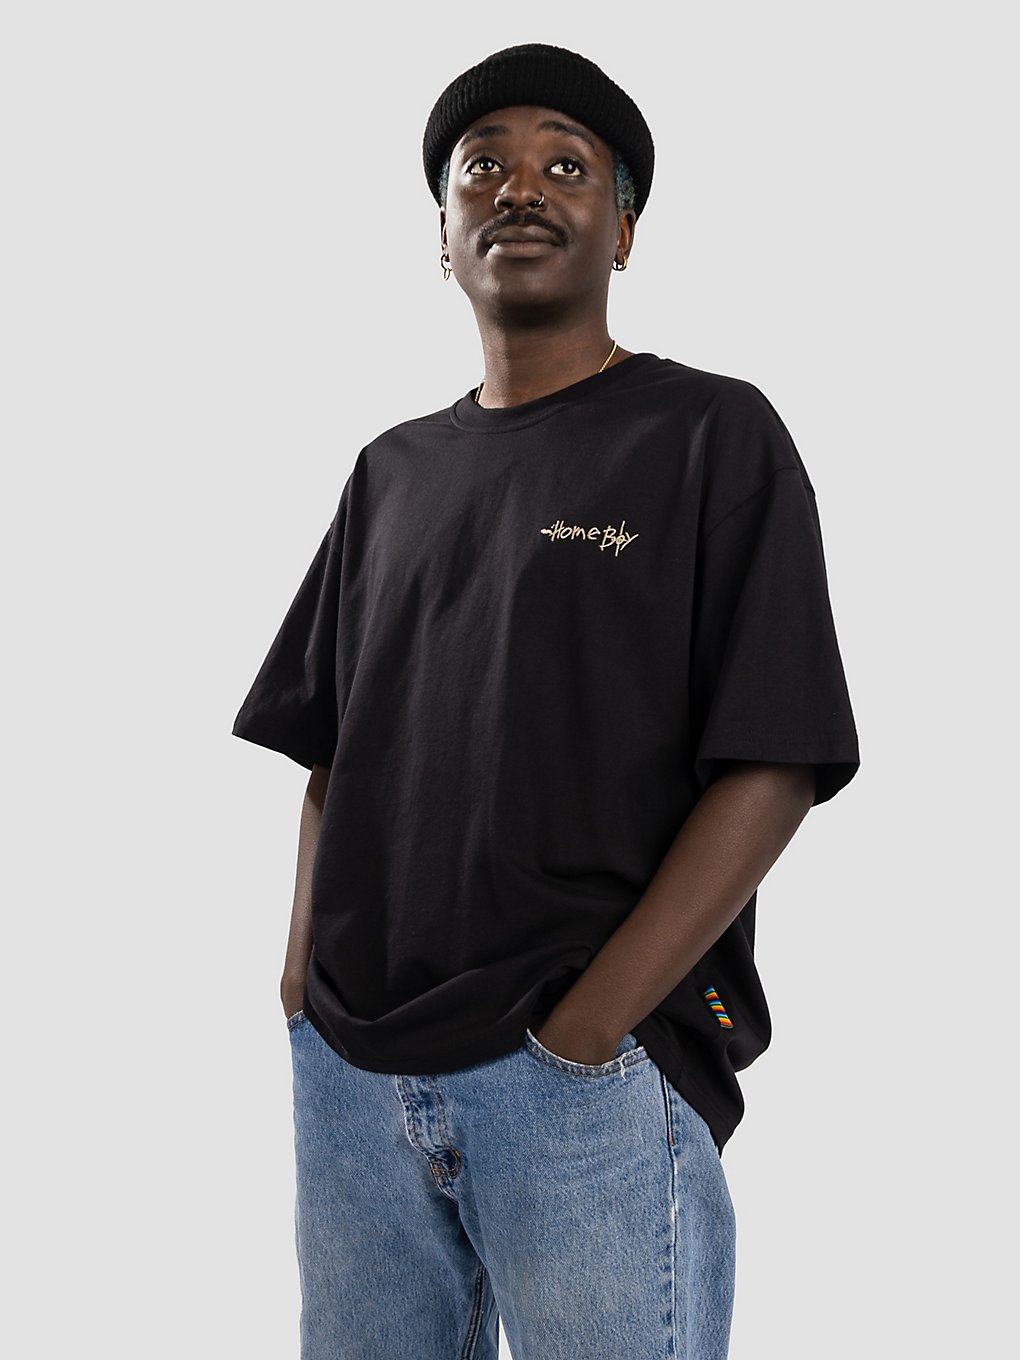 Homeboy PENCIL T-Shirt black kaufen